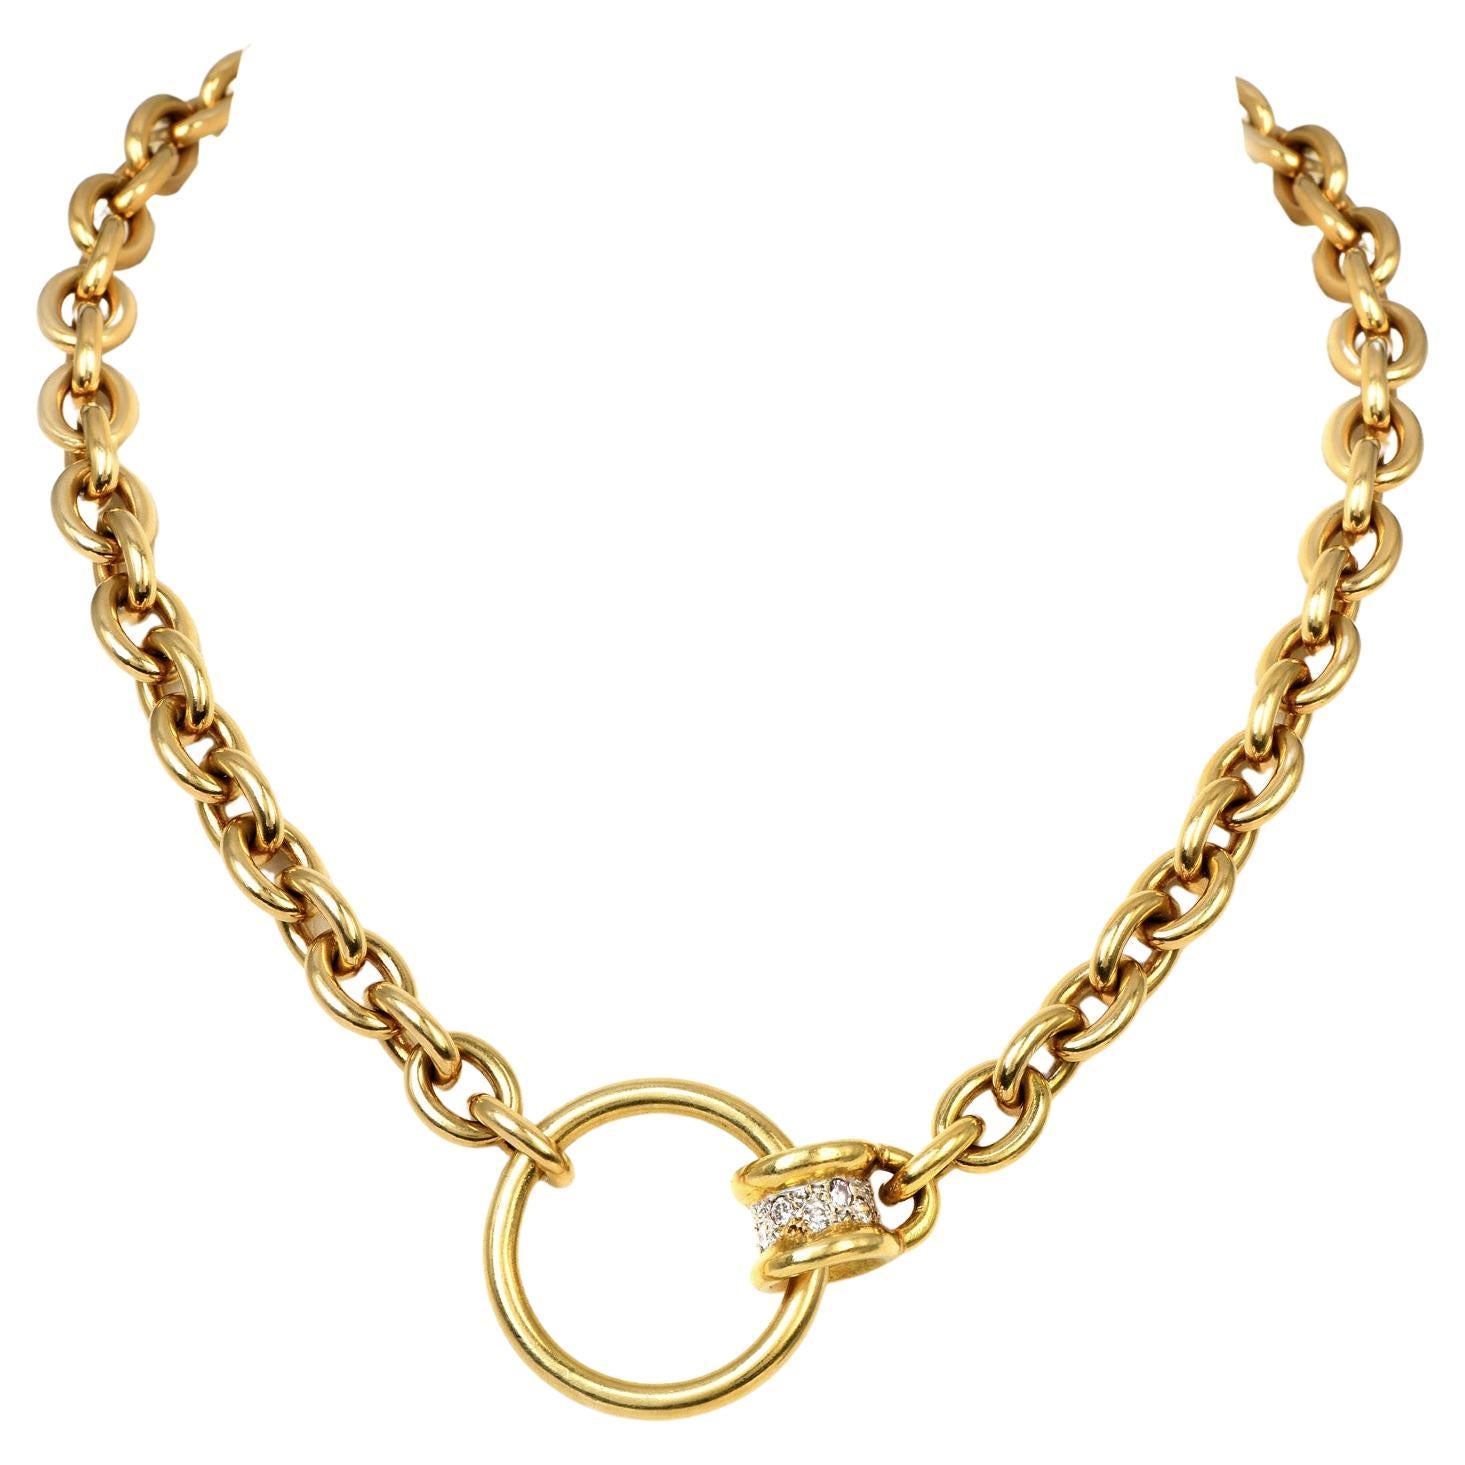 1980's Chic Italian Heavy Solid 18k Gold Diamond Choker Chain Necklace